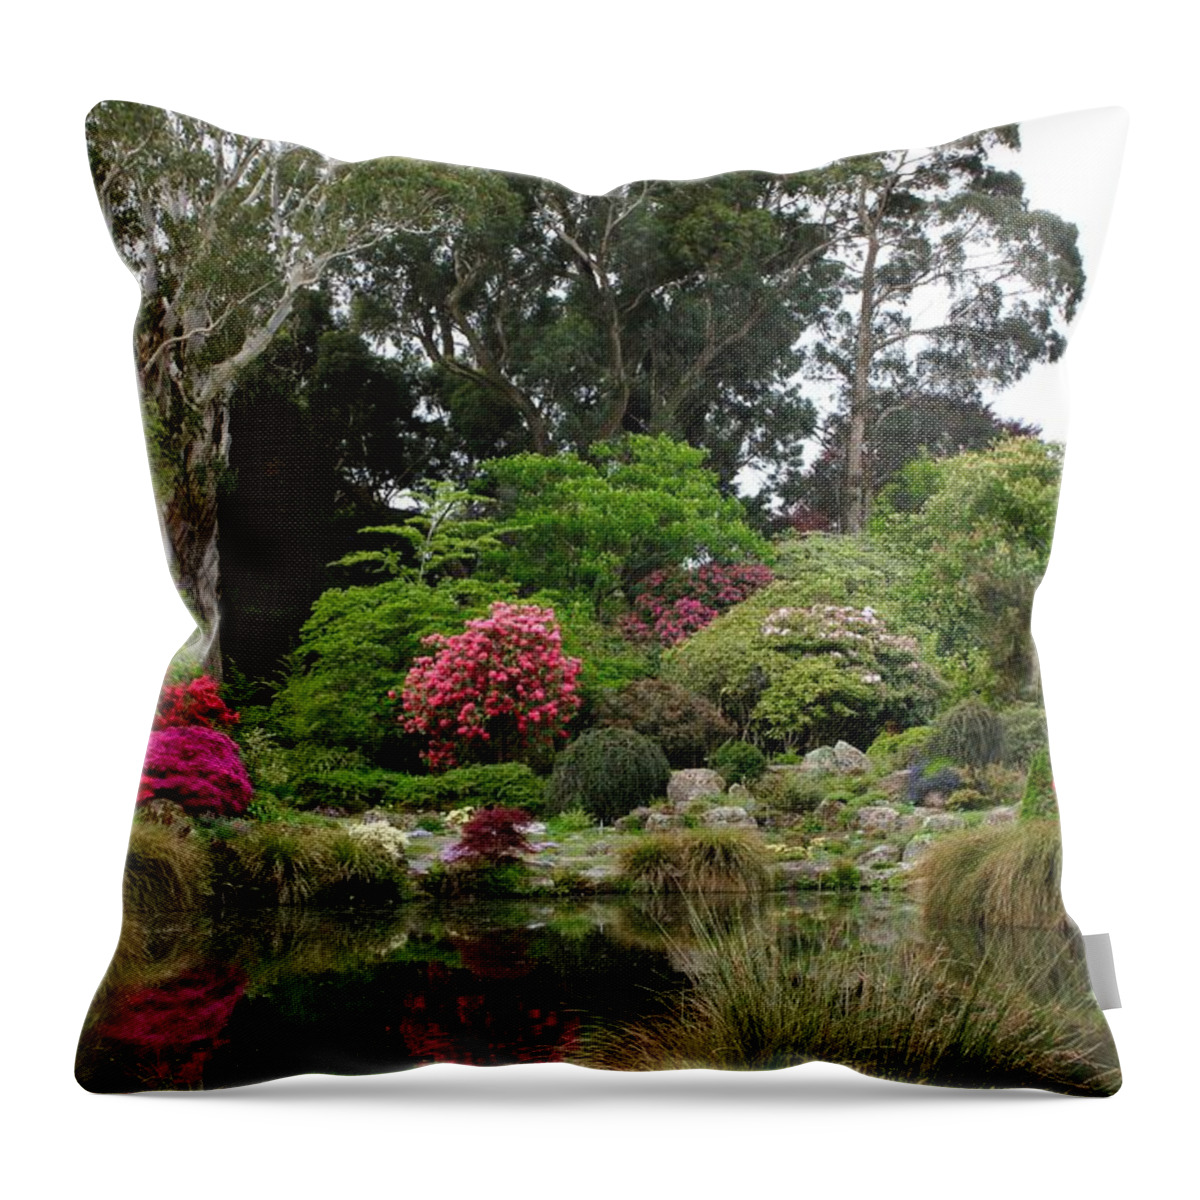 Christchurch Throw Pillow featuring the photograph Garden Reflection by Sarah Lilja